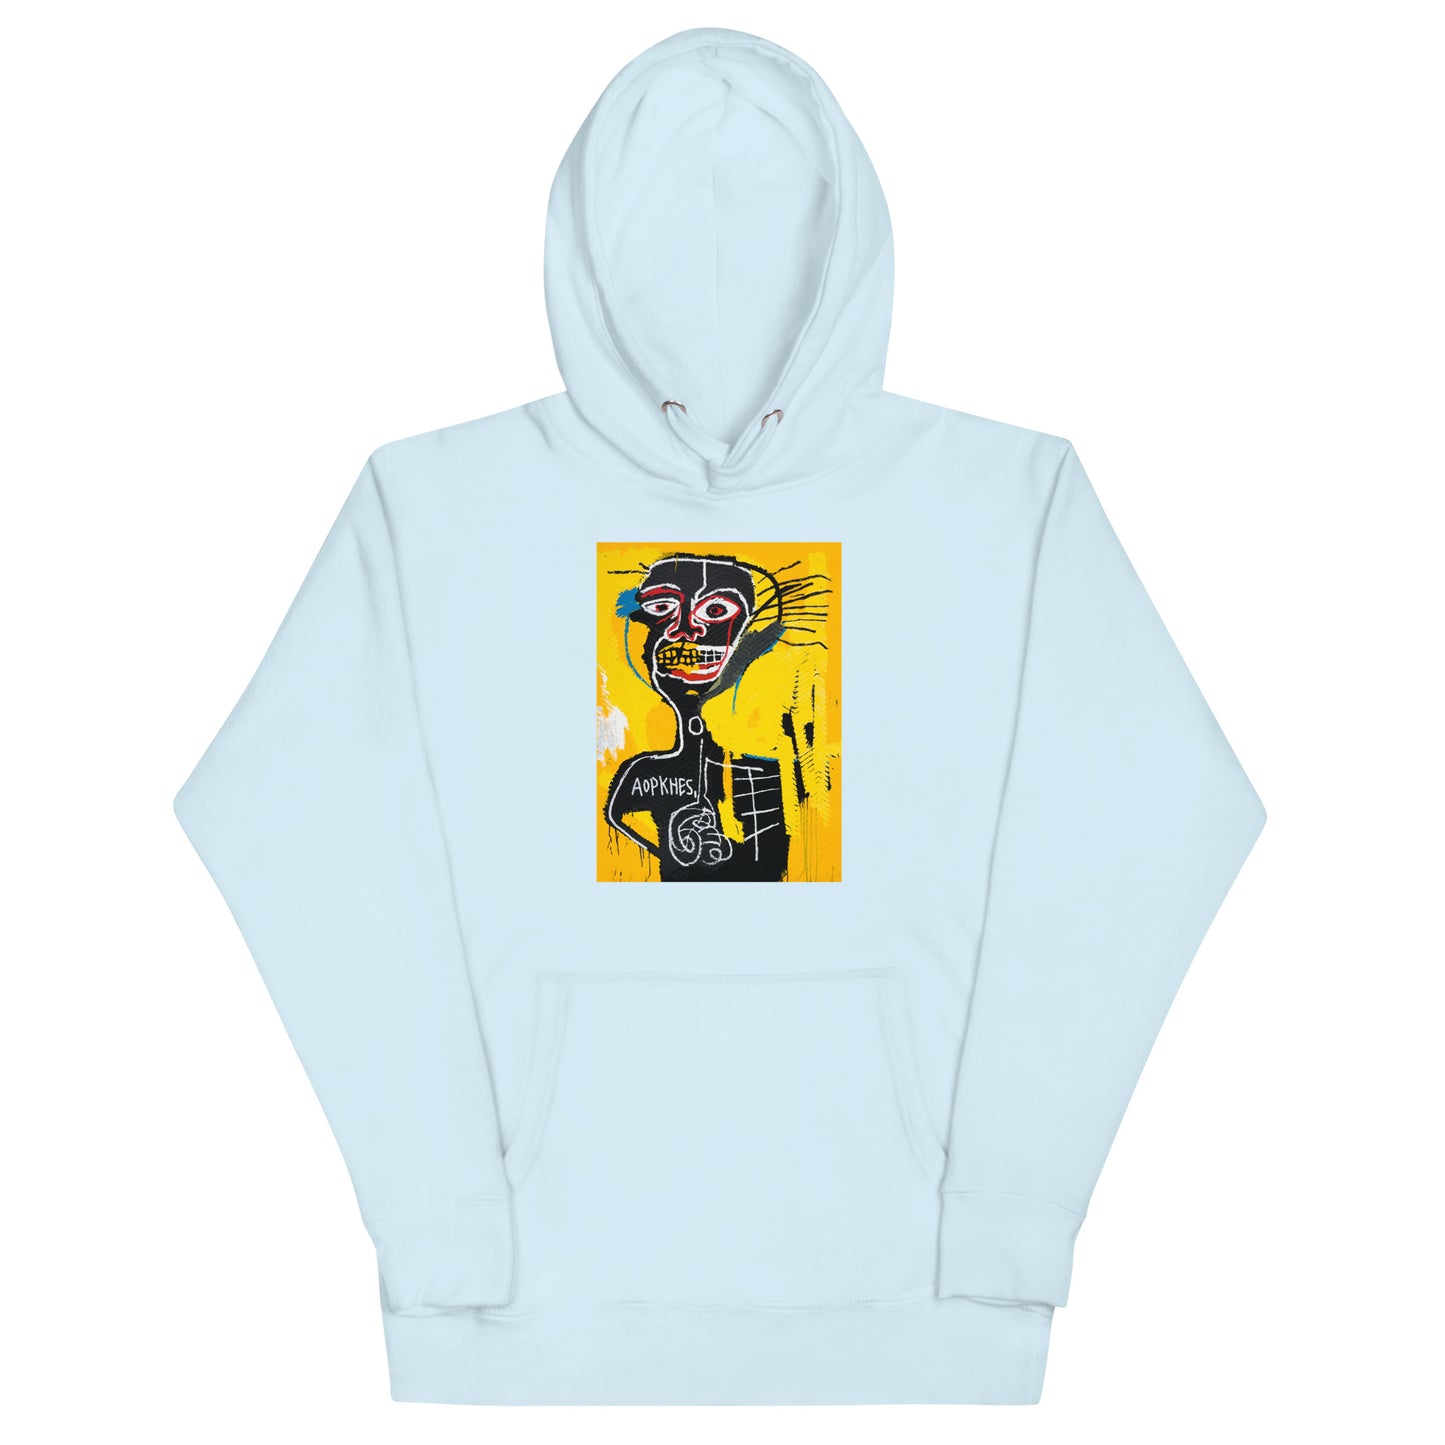 Jean-Michel Basquiat "Cabeza" Artwork Printed Premium Streetwear Sweatshirt Hoodie Ice Blue